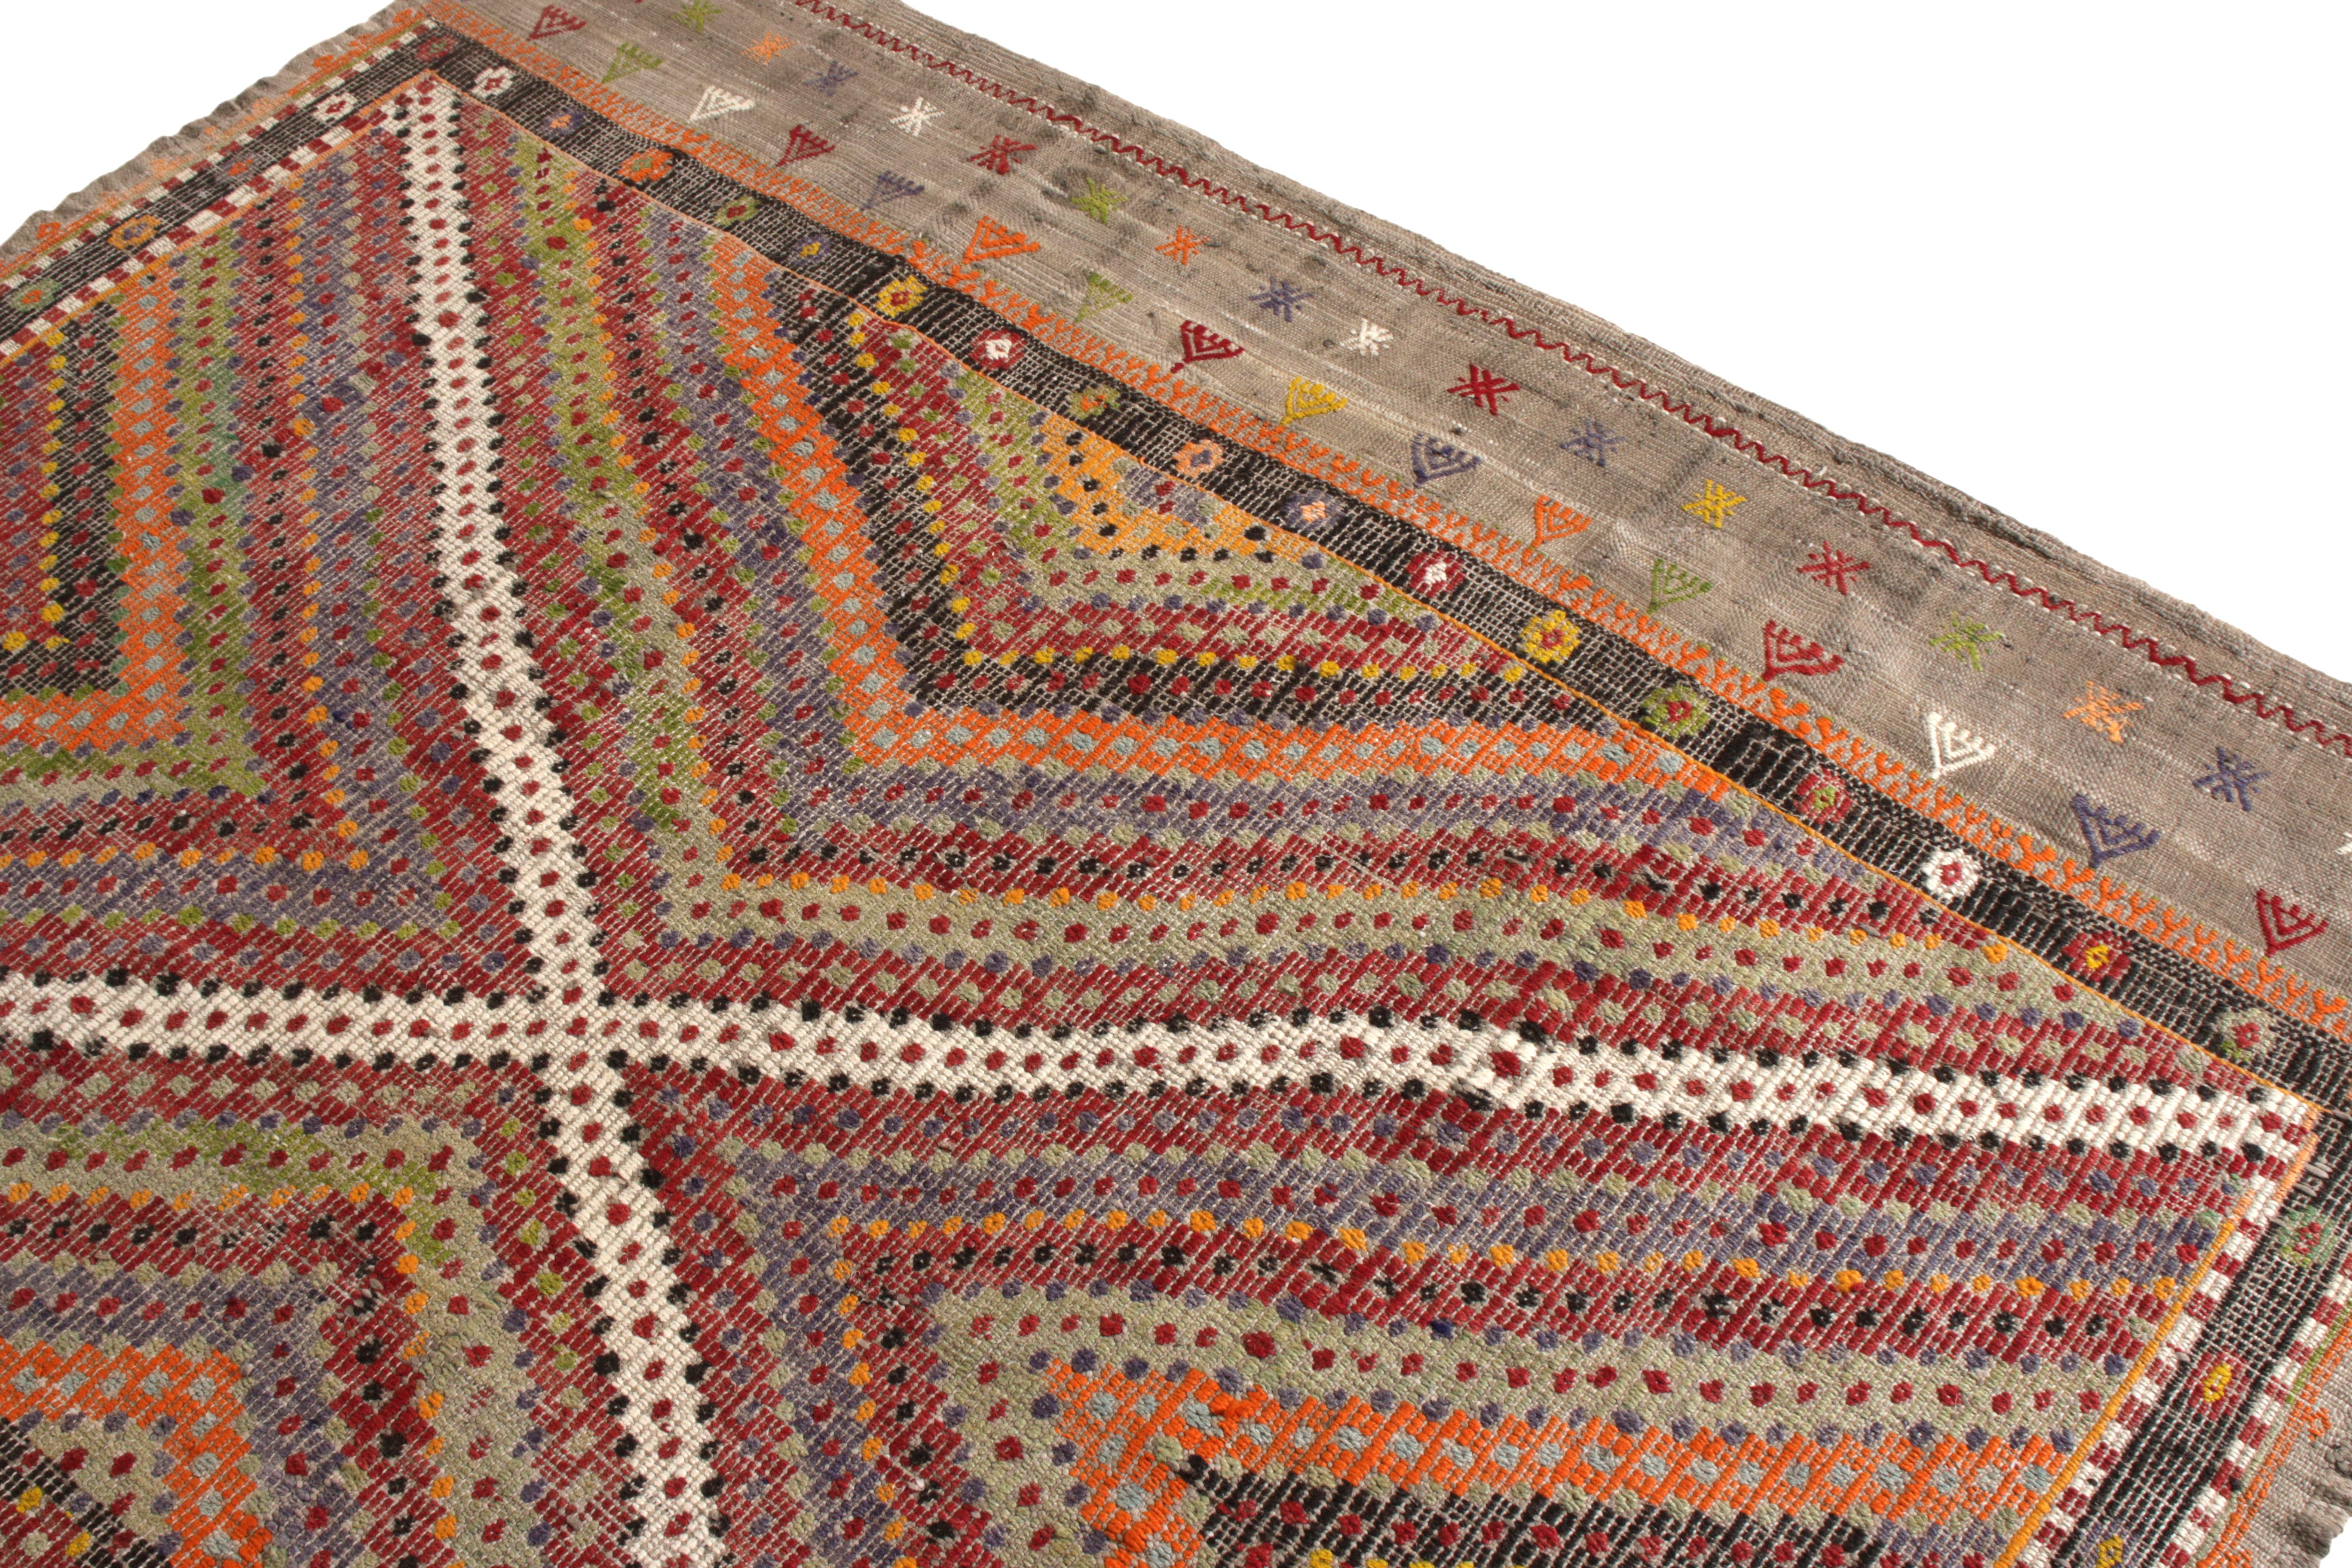 Turkish Vintage Kilim Rug in High-Low Multicolor Geometric Pattern by Rug & Kilim For Sale